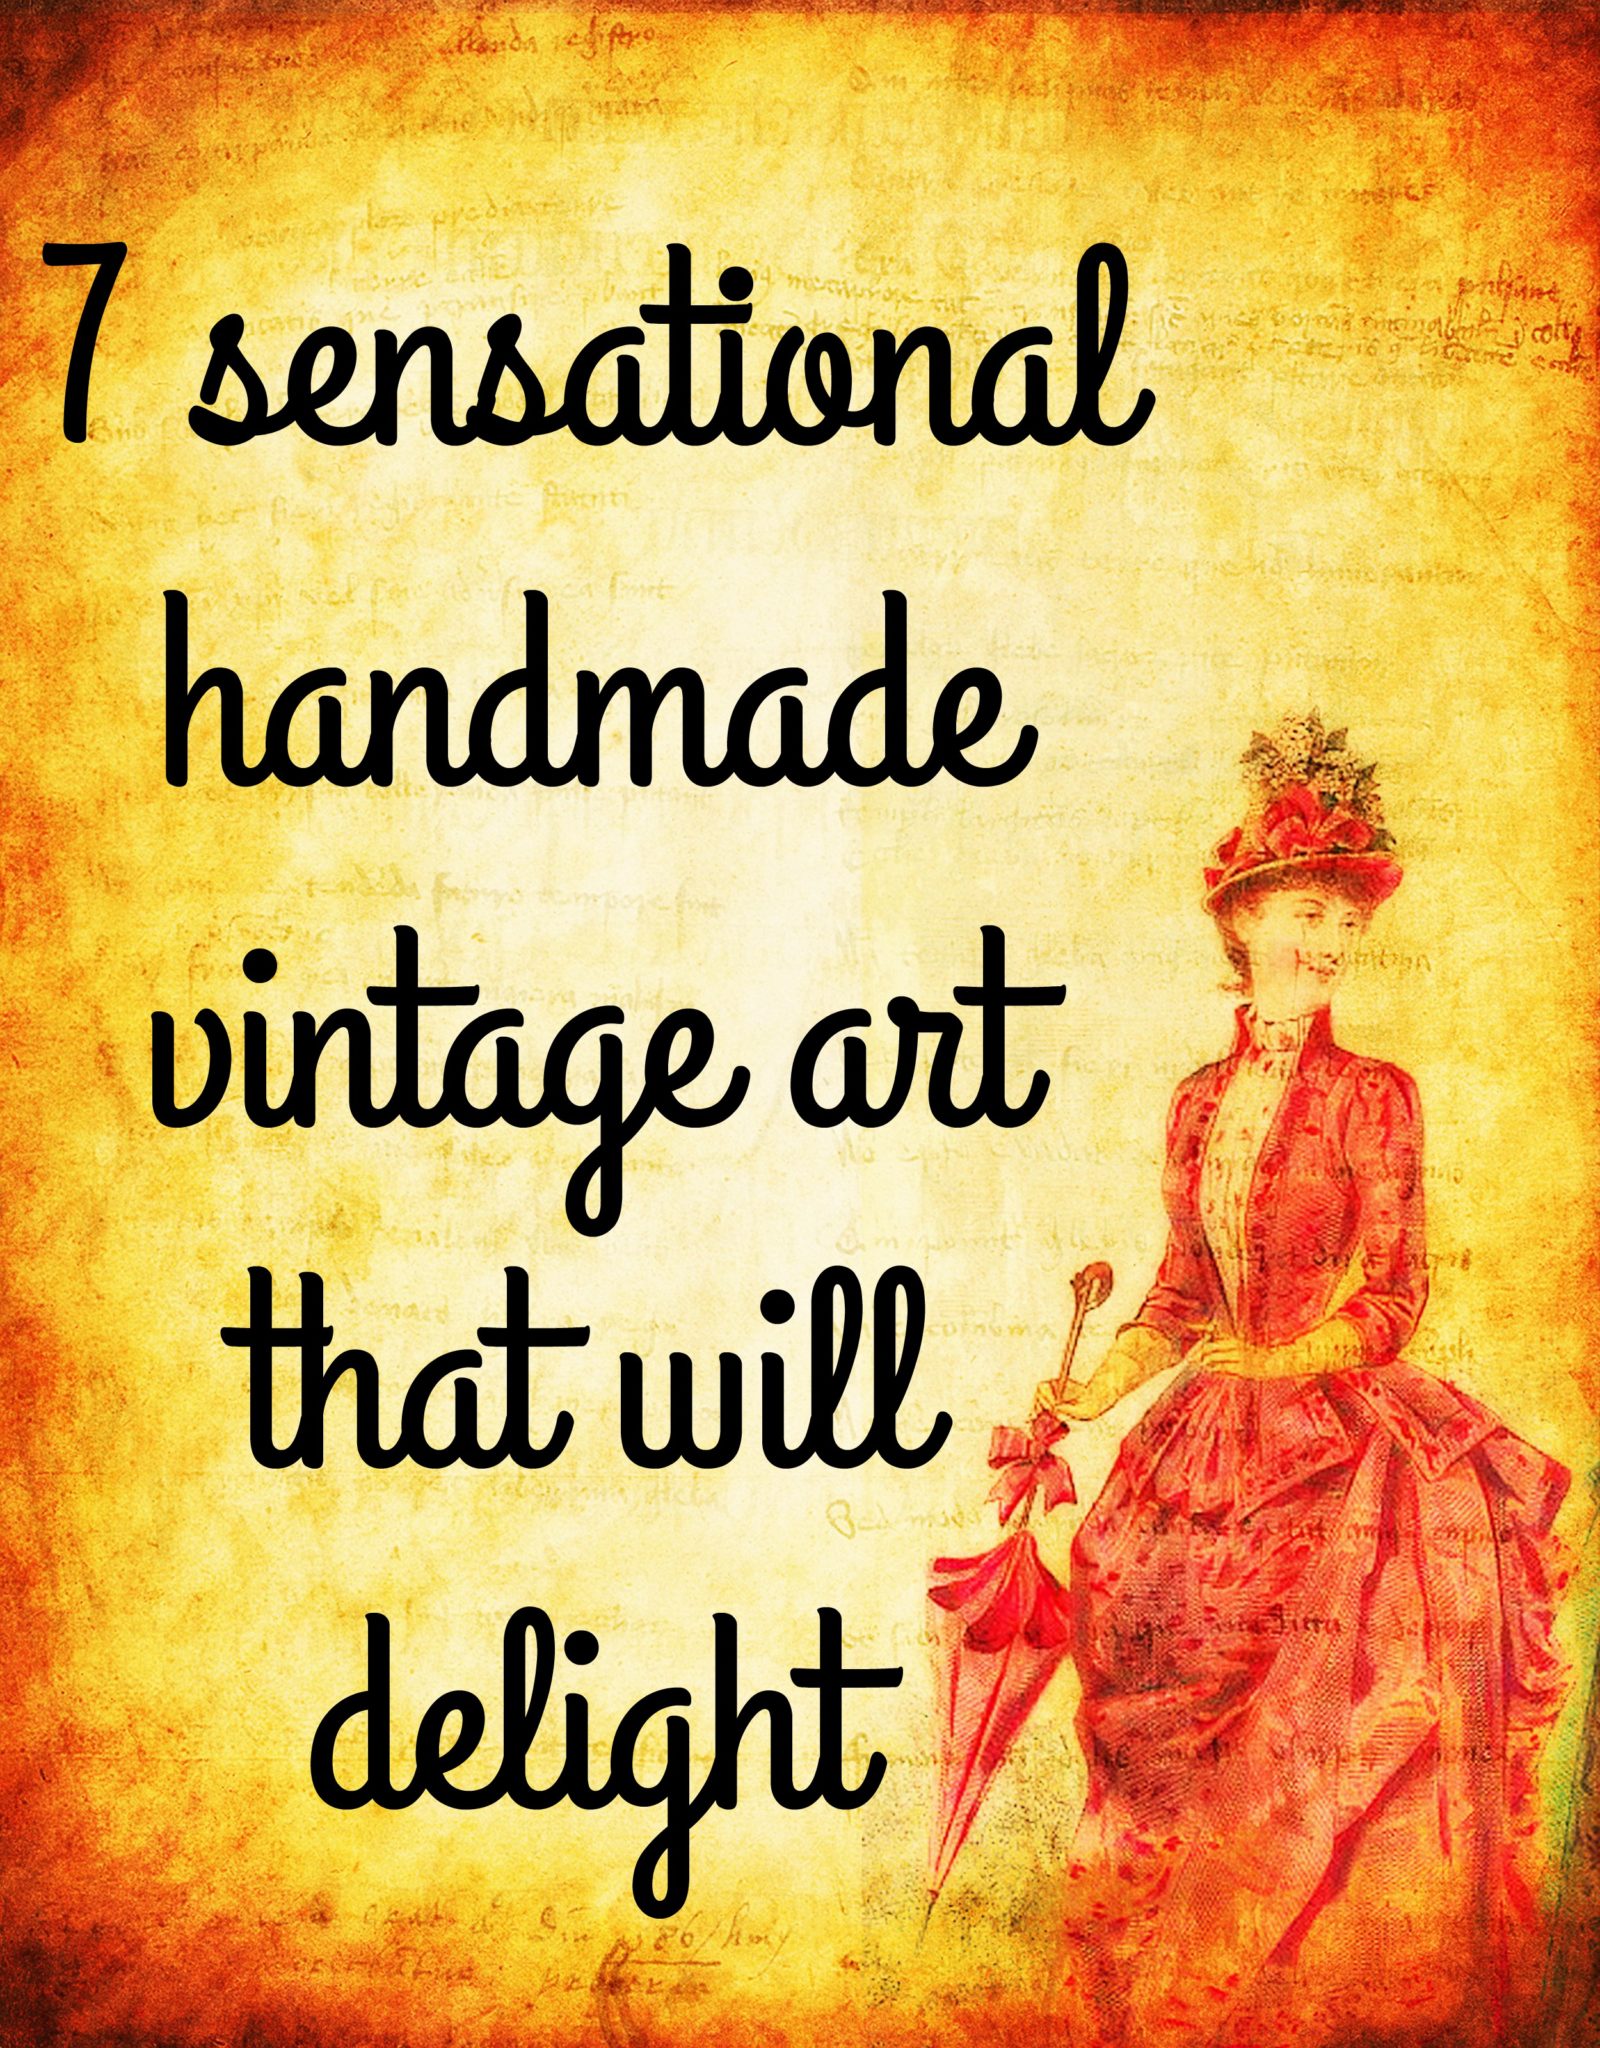 7 sensational handmade vintage art that will delight